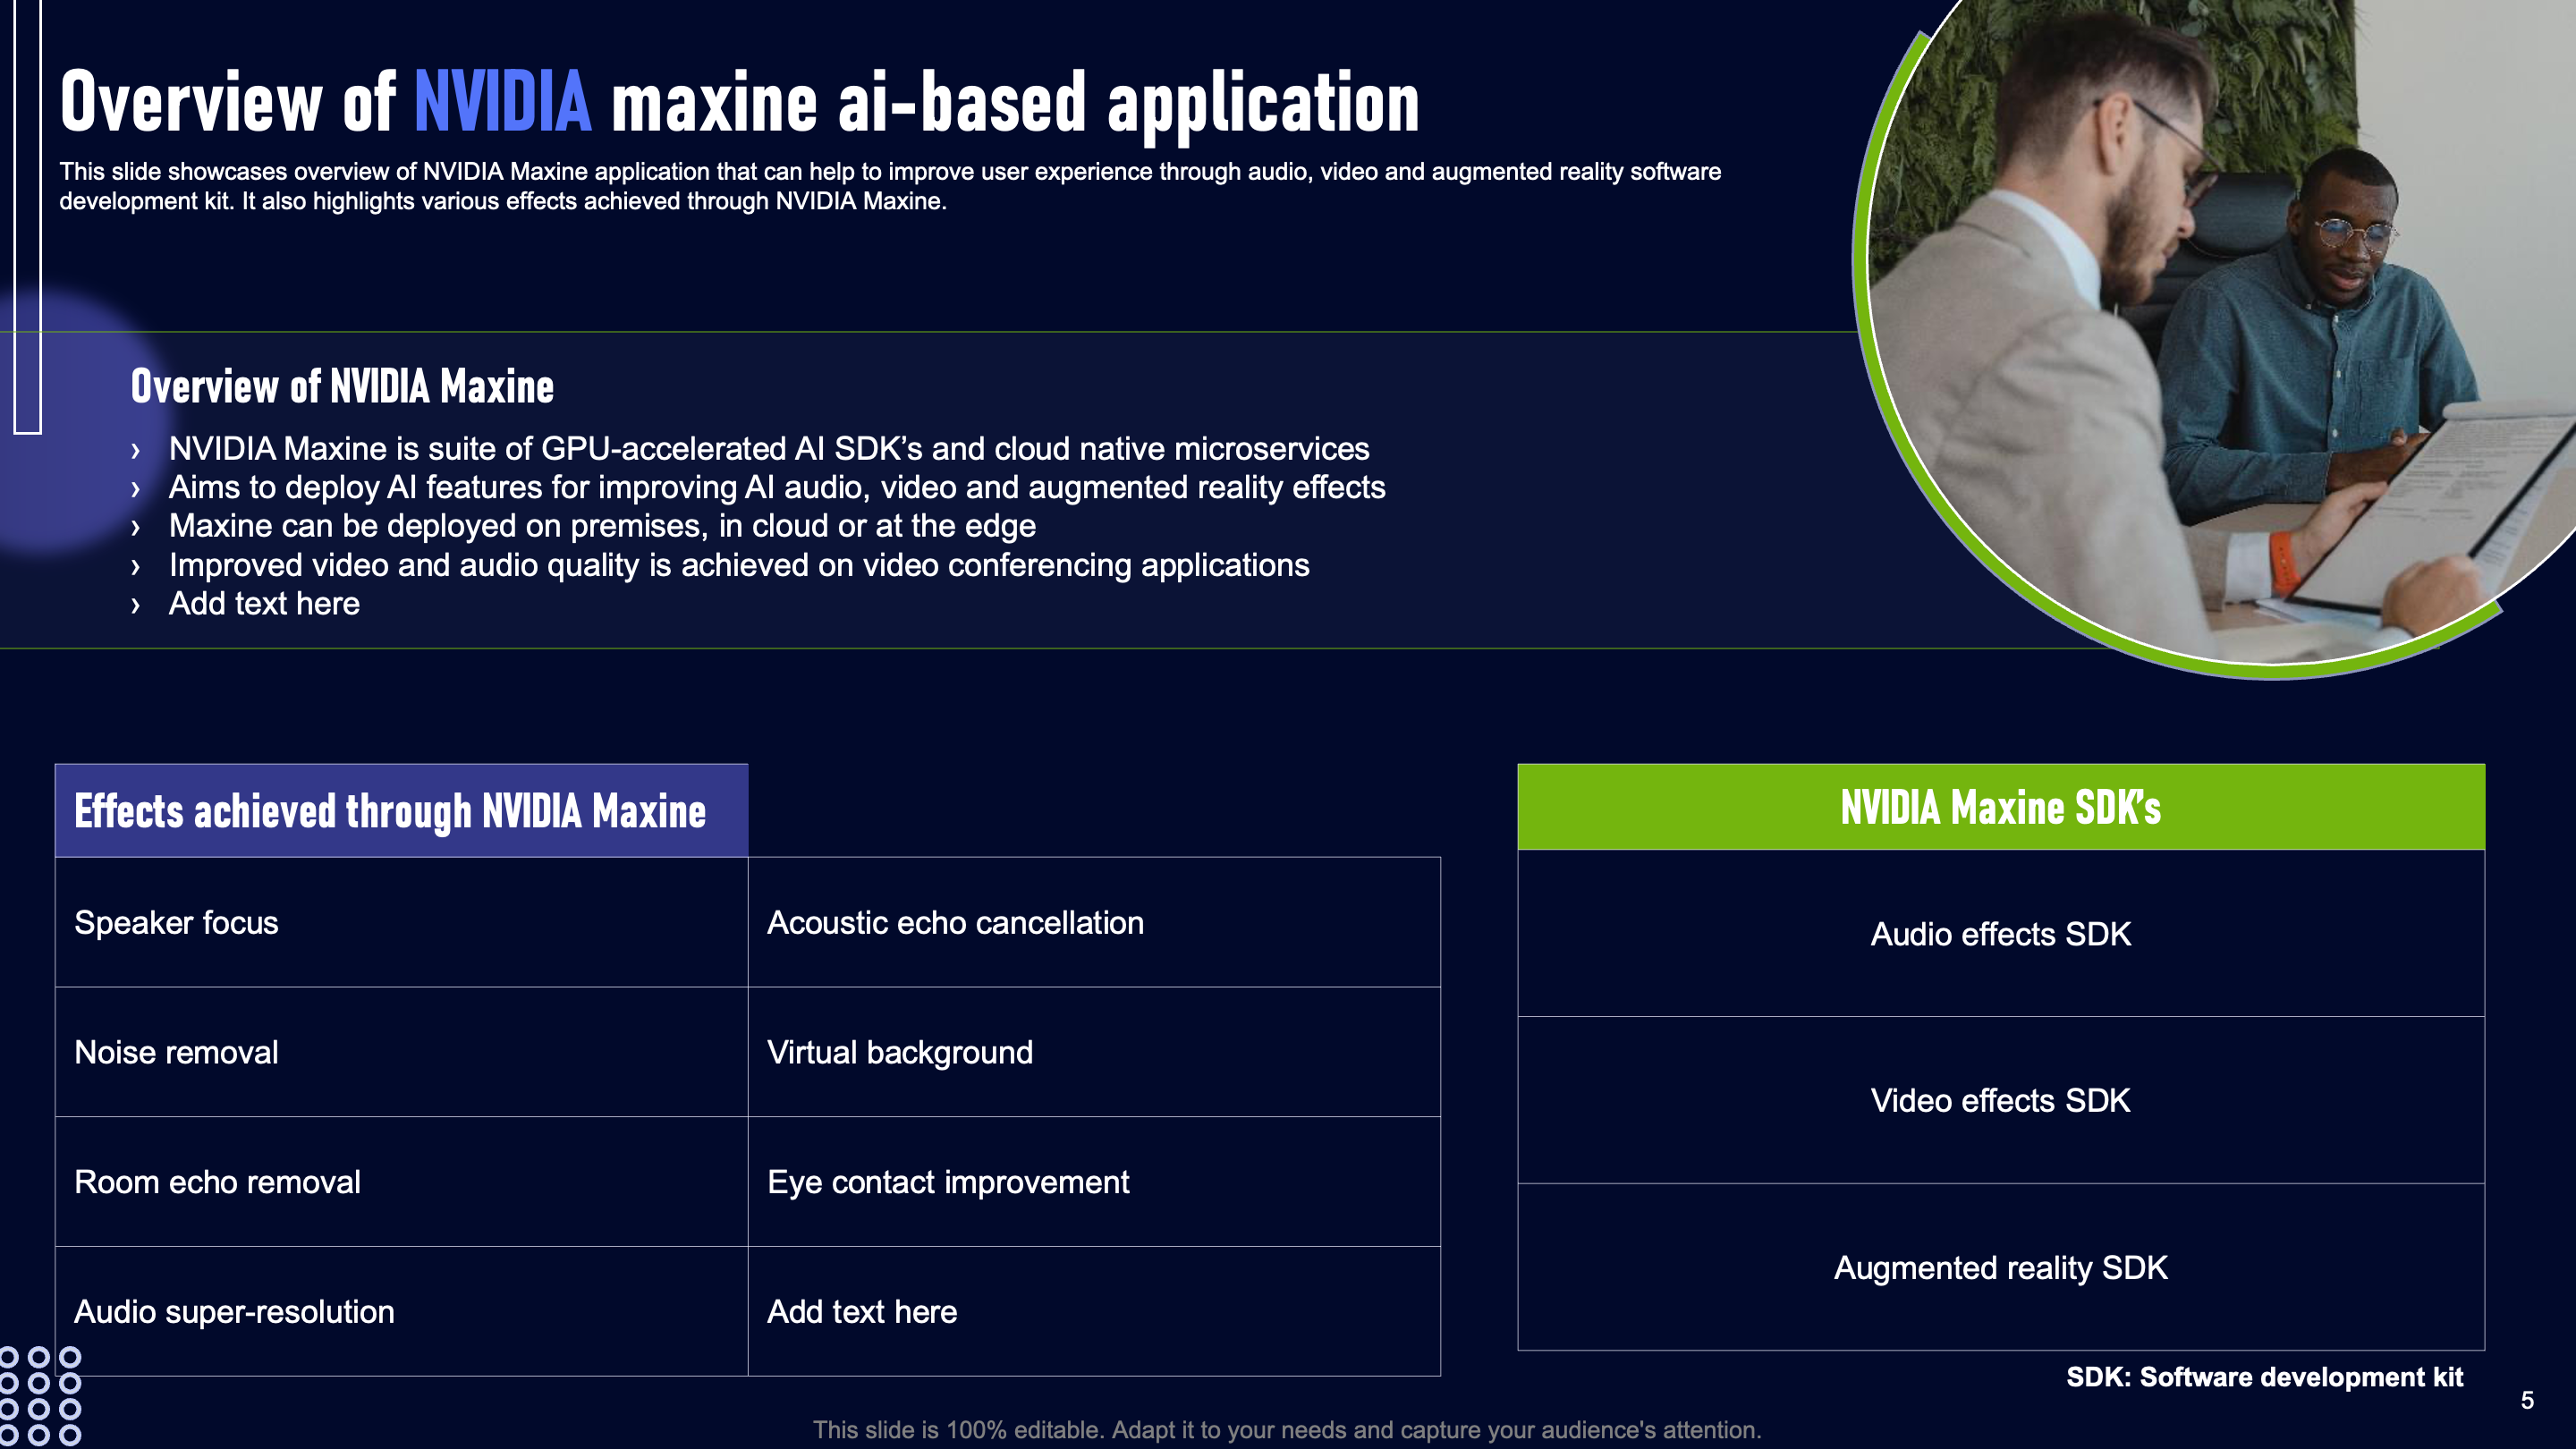 Overview of NVIDIA Maxine AI-Based Application